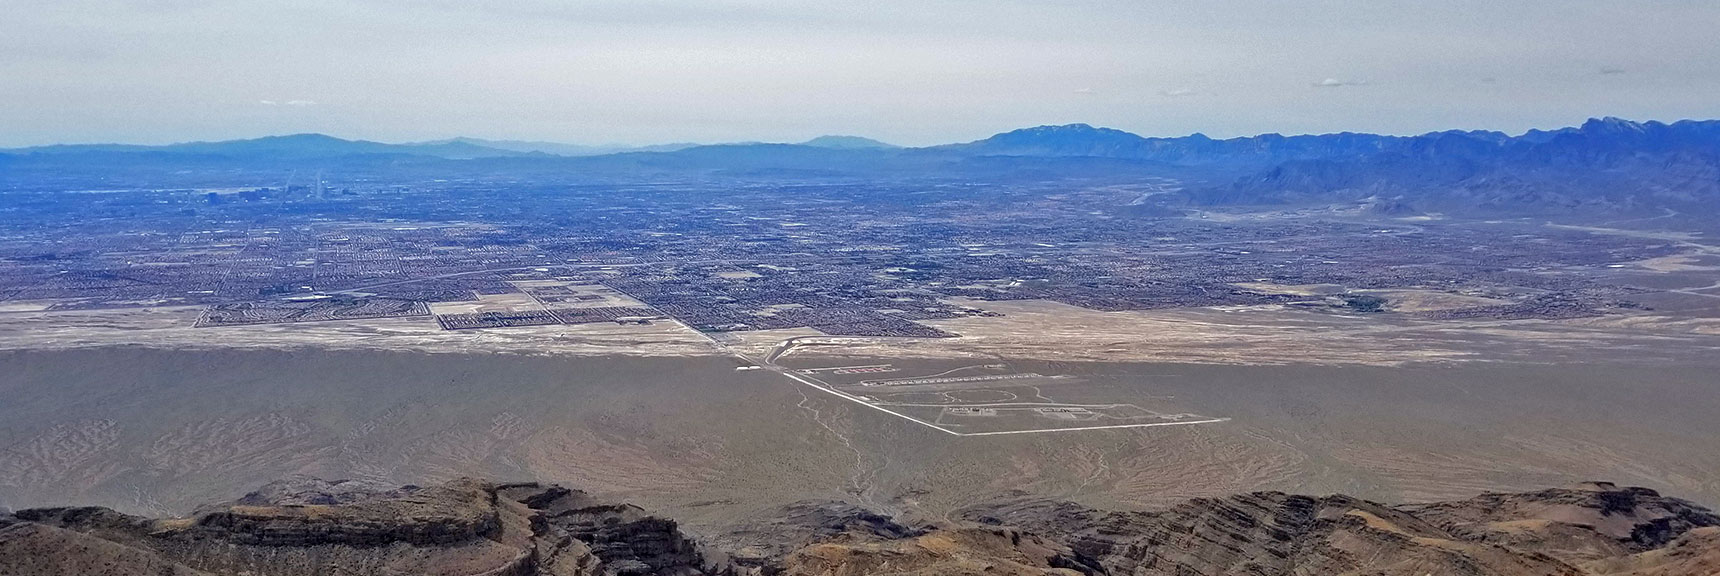 View of Northern Las Vegas from Near the Gass Peak Eastern Summit | Gass Peak Eastern Summit Ultra-marathon Adventure, Nevada